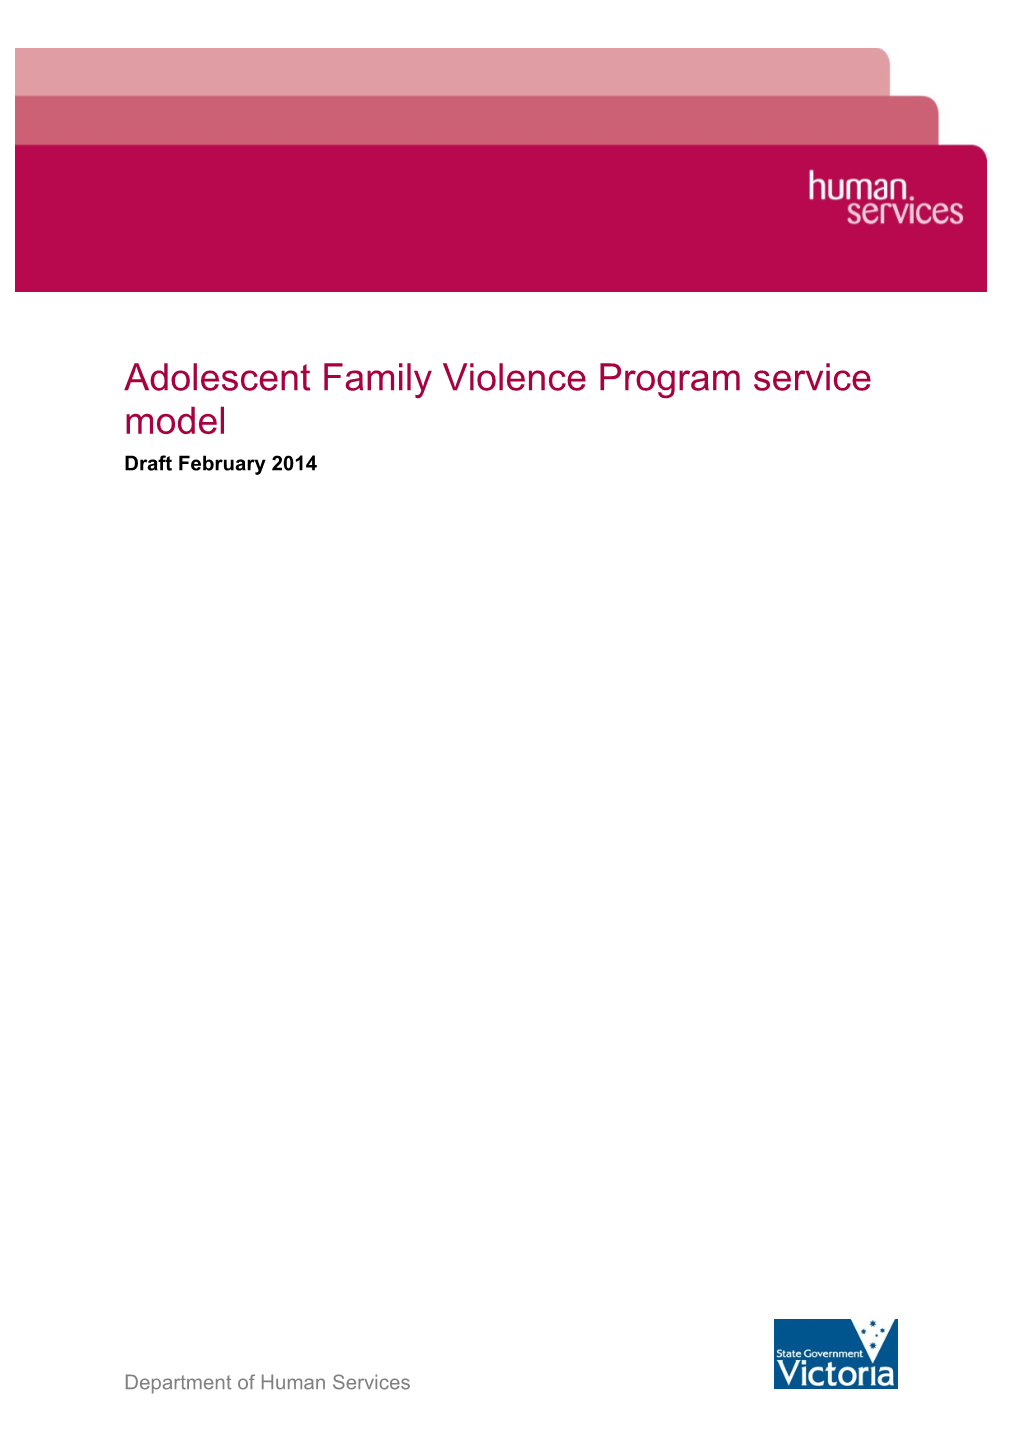 Adolescent Family Violence Program Service Model